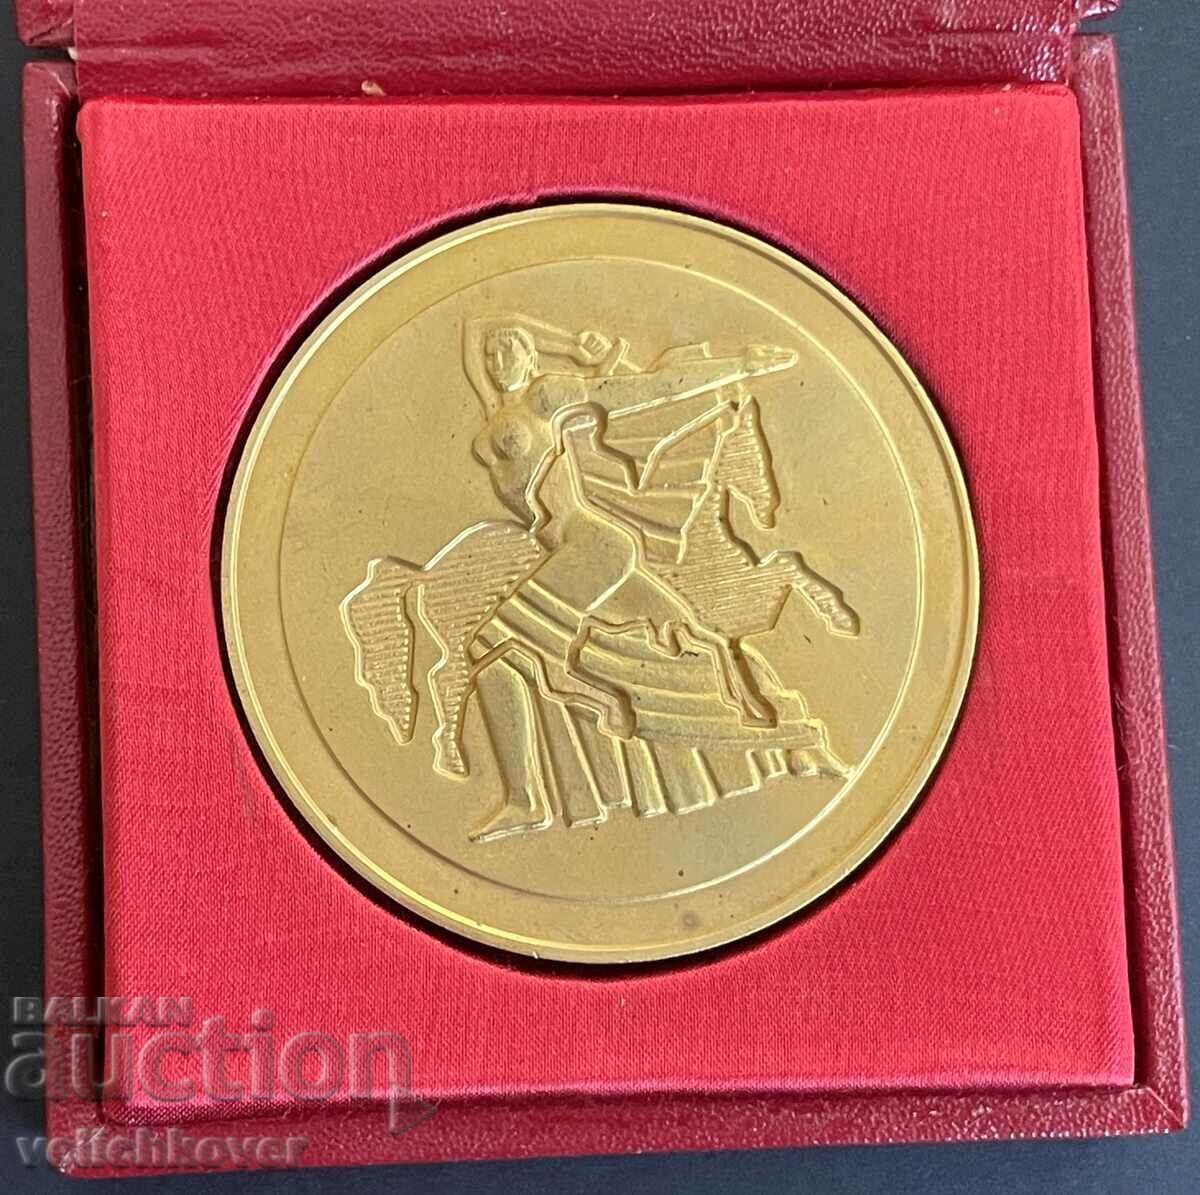 33379 Bulgaria medal plaque 13th Century Bulgaria 1981 With a box